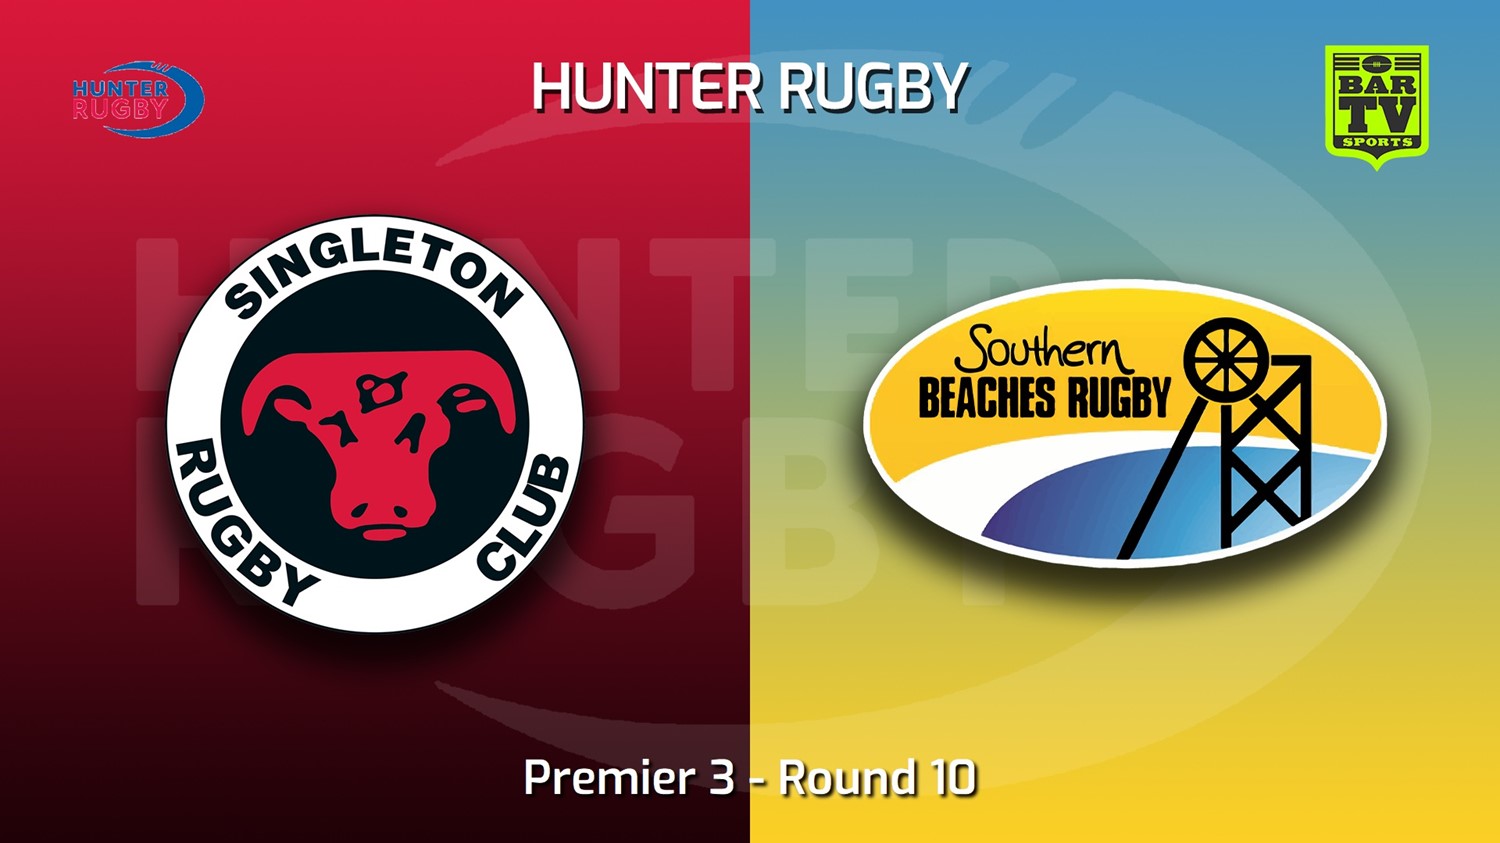 220702-Hunter Rugby Round 10 - Premier 3 - Singleton Bulls v Southern Beaches Slate Image